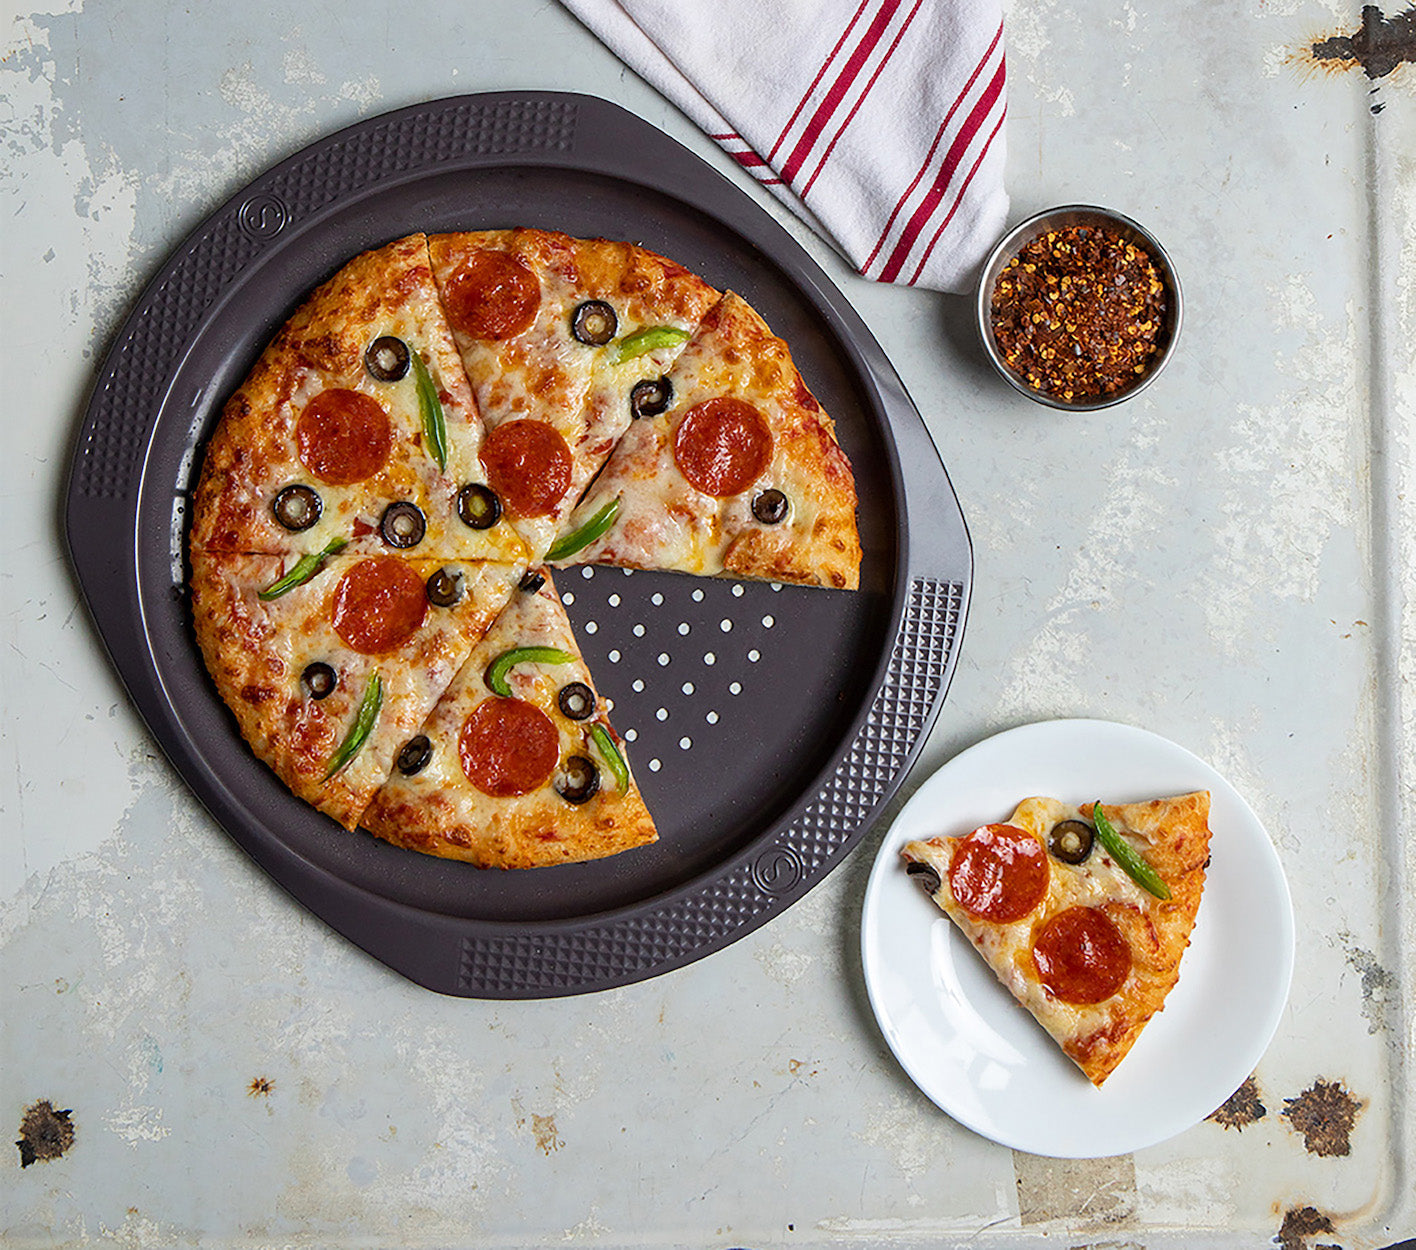 Baker's Secret Non stick Pizza Pan for Oven 12.5, Carbon Steel